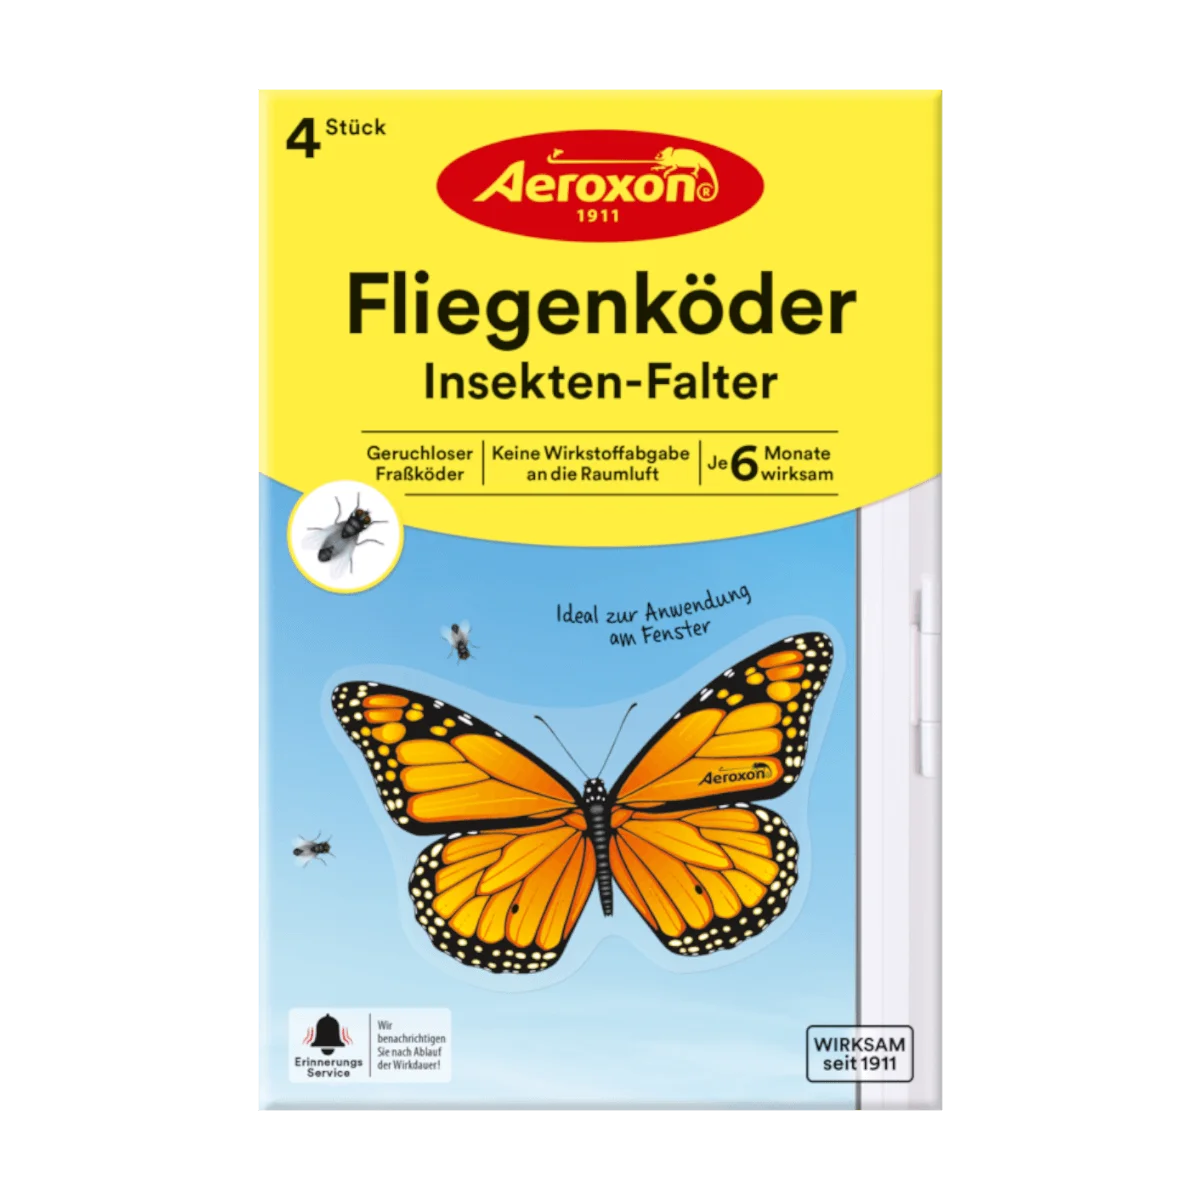 Aeroxon Fliegenköder Insekten-Falter, 4 Stk.